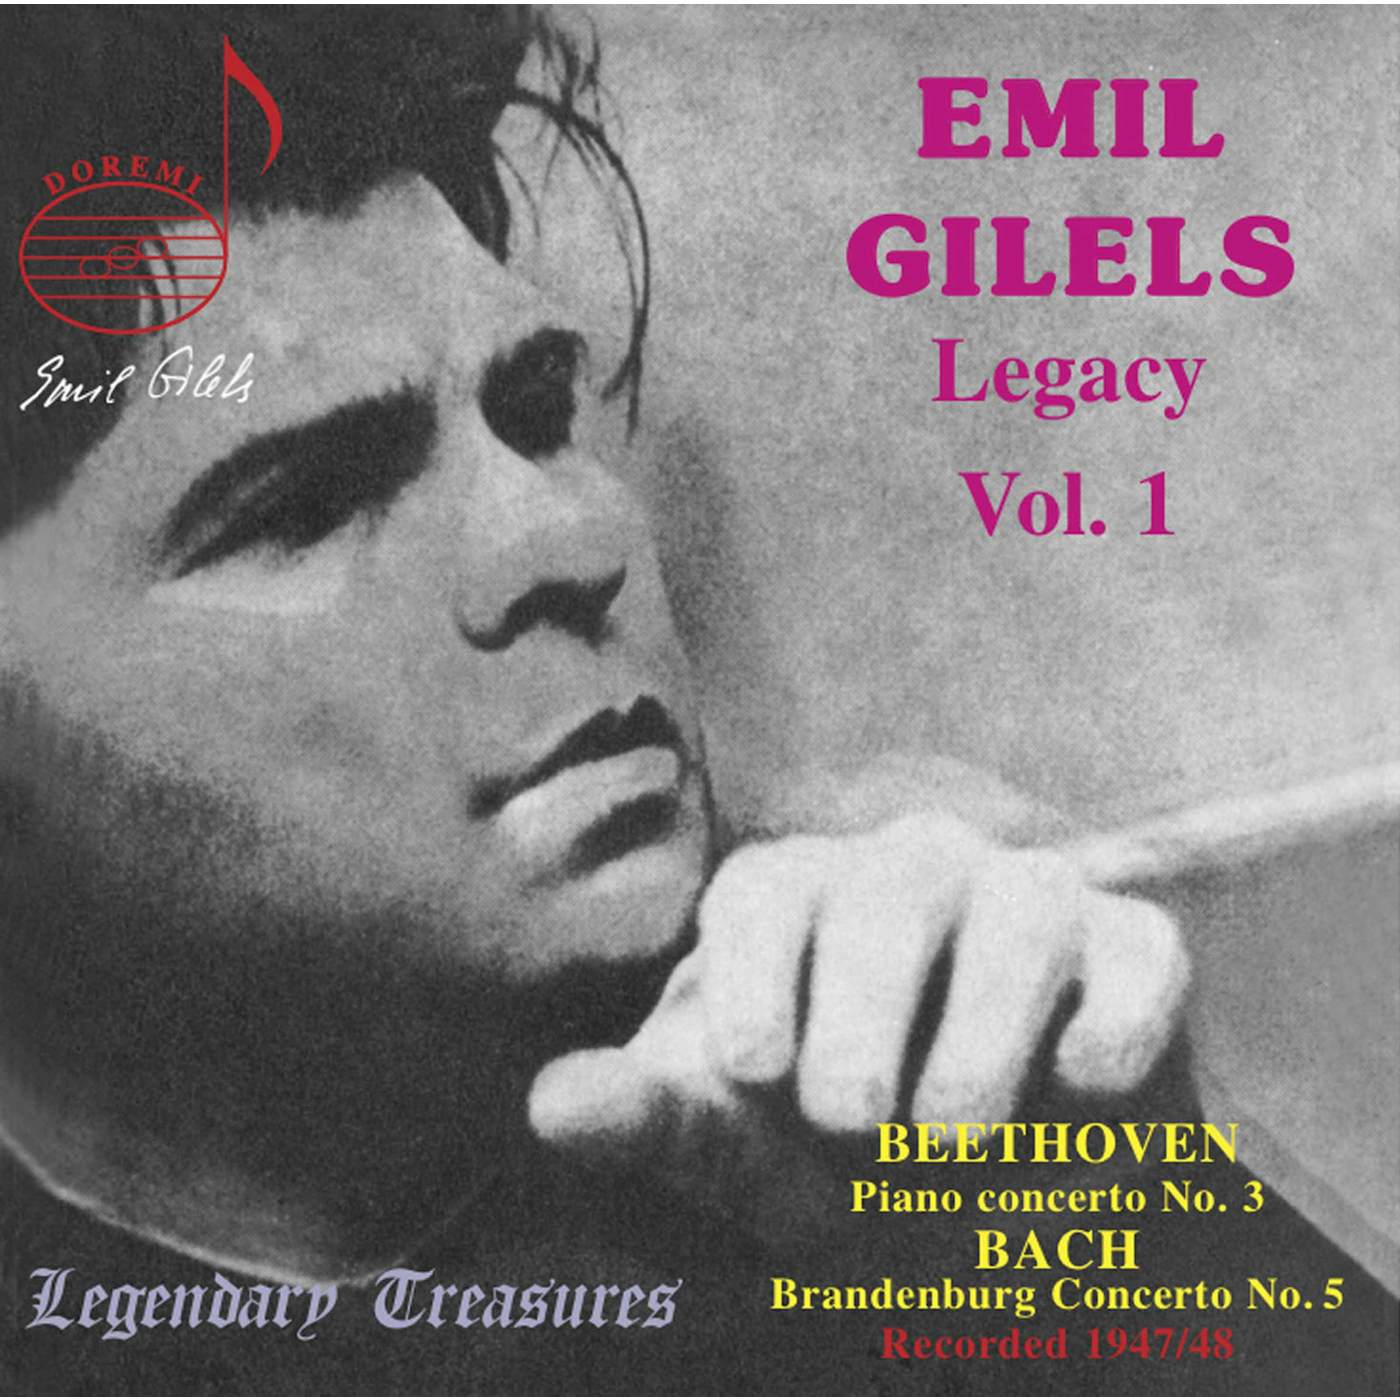 Emil Gilels LEGACY 1 CD